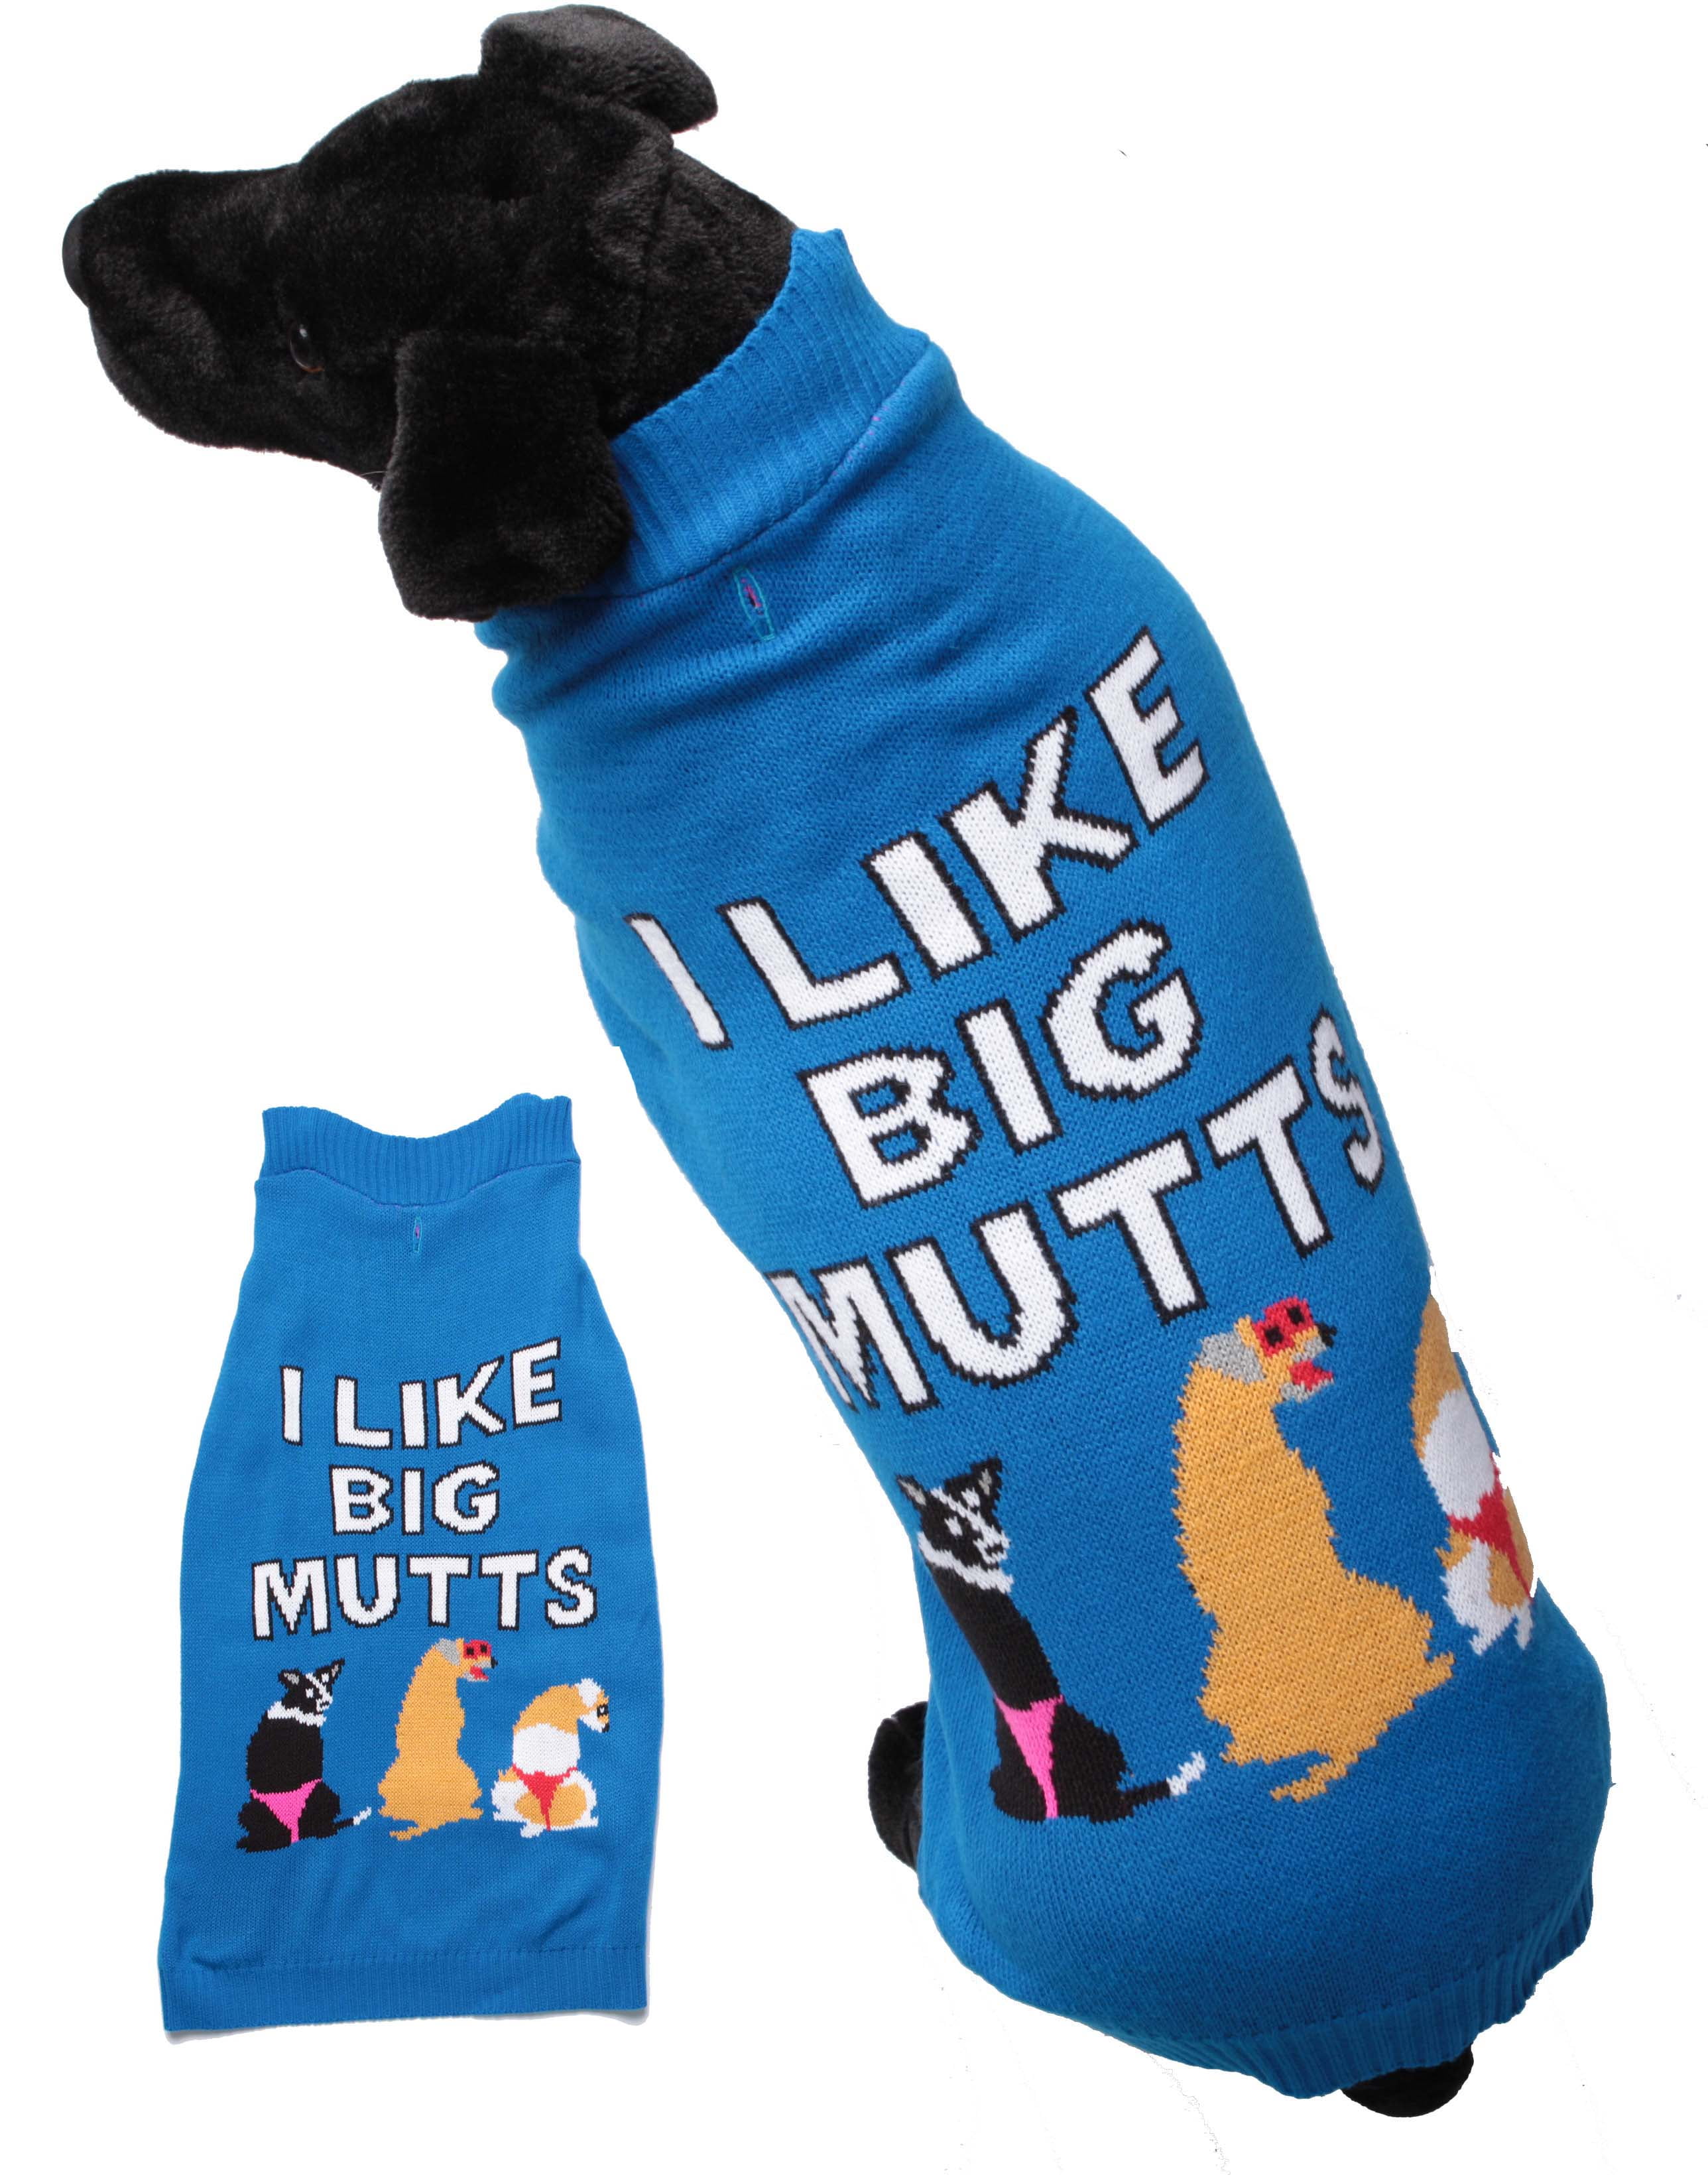 Black Knit Long Sleeve Shirt Dog Puppy Pet Apparel Clothes XXXS Large 